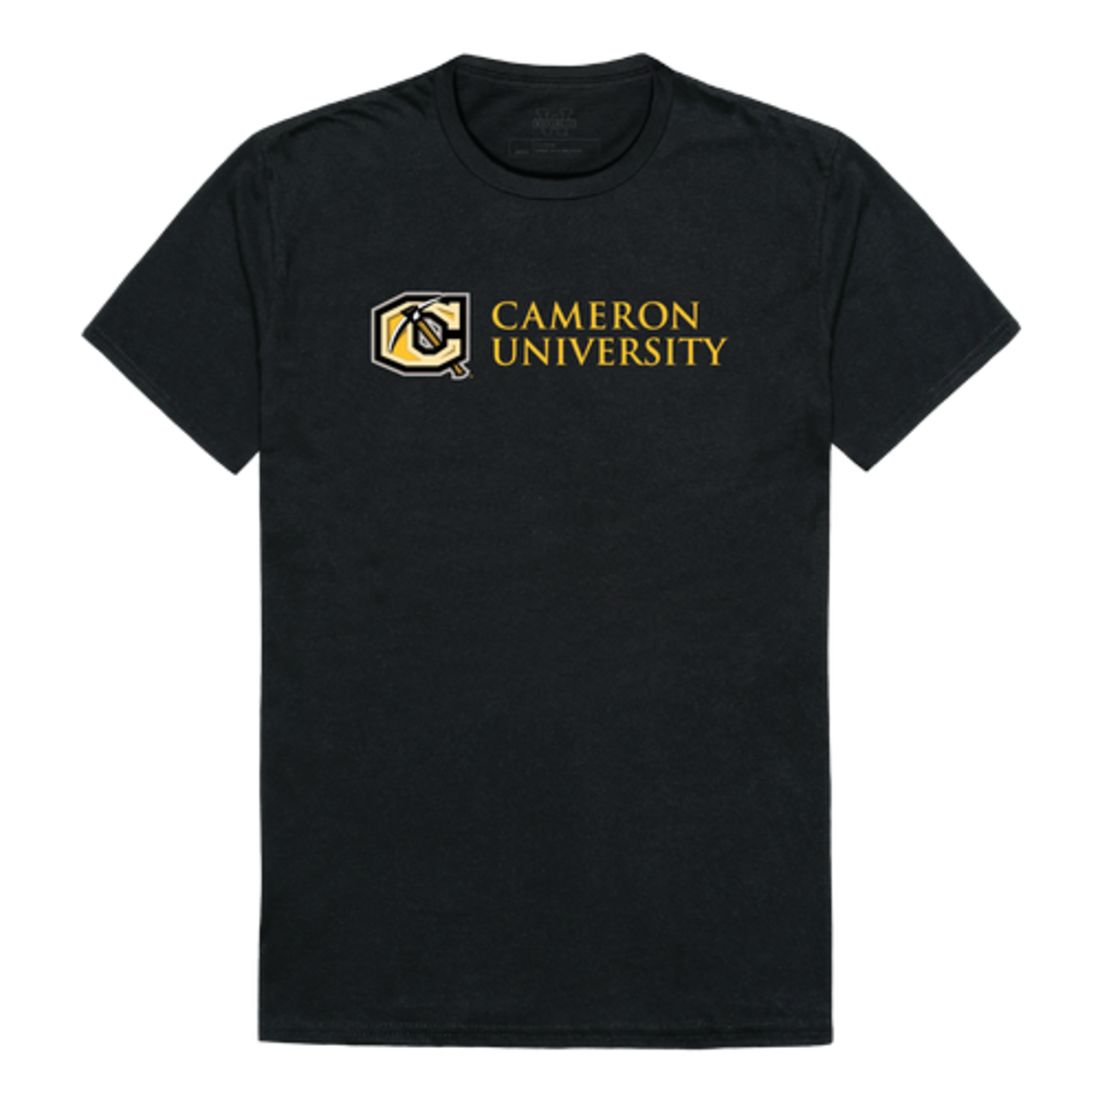 Cameron University Aggies Institutional T-Shirt Tee